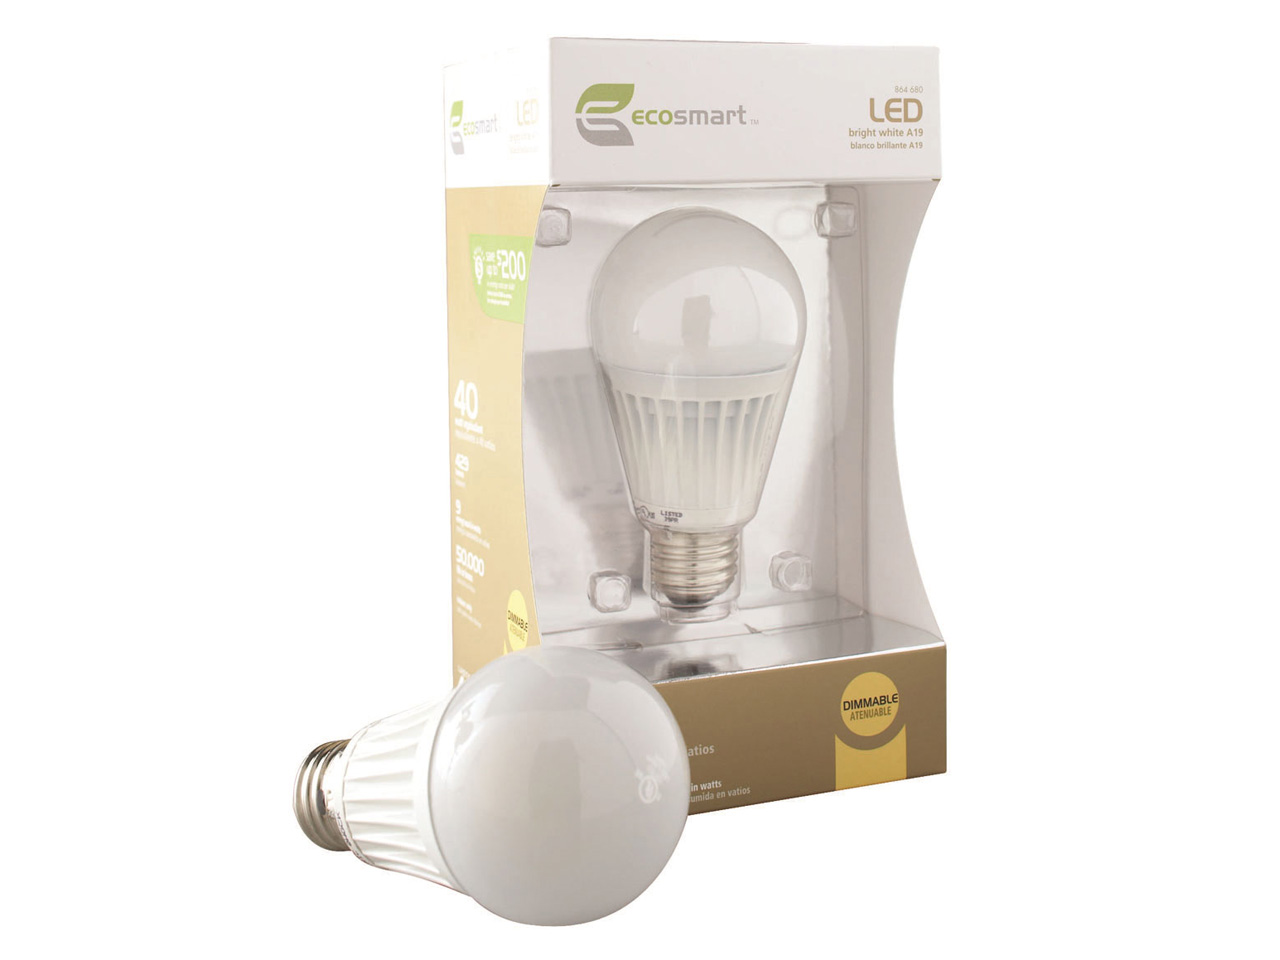 Home EcoSmart A19 8.6W LED Bulb Review LED-Resource